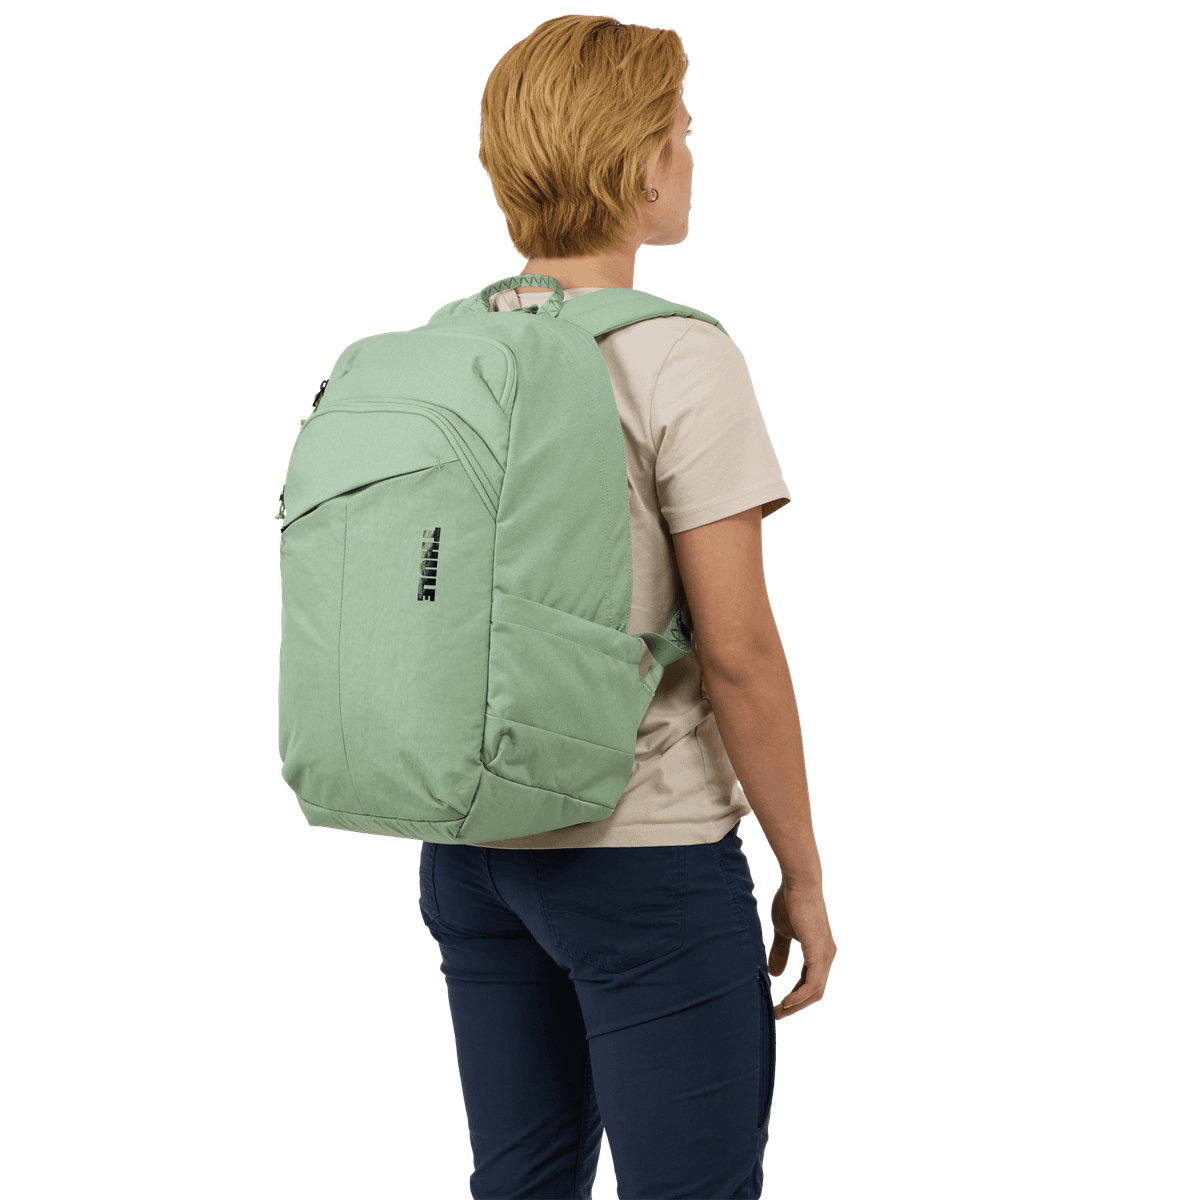 Thule Exeo backpack 28L basil green